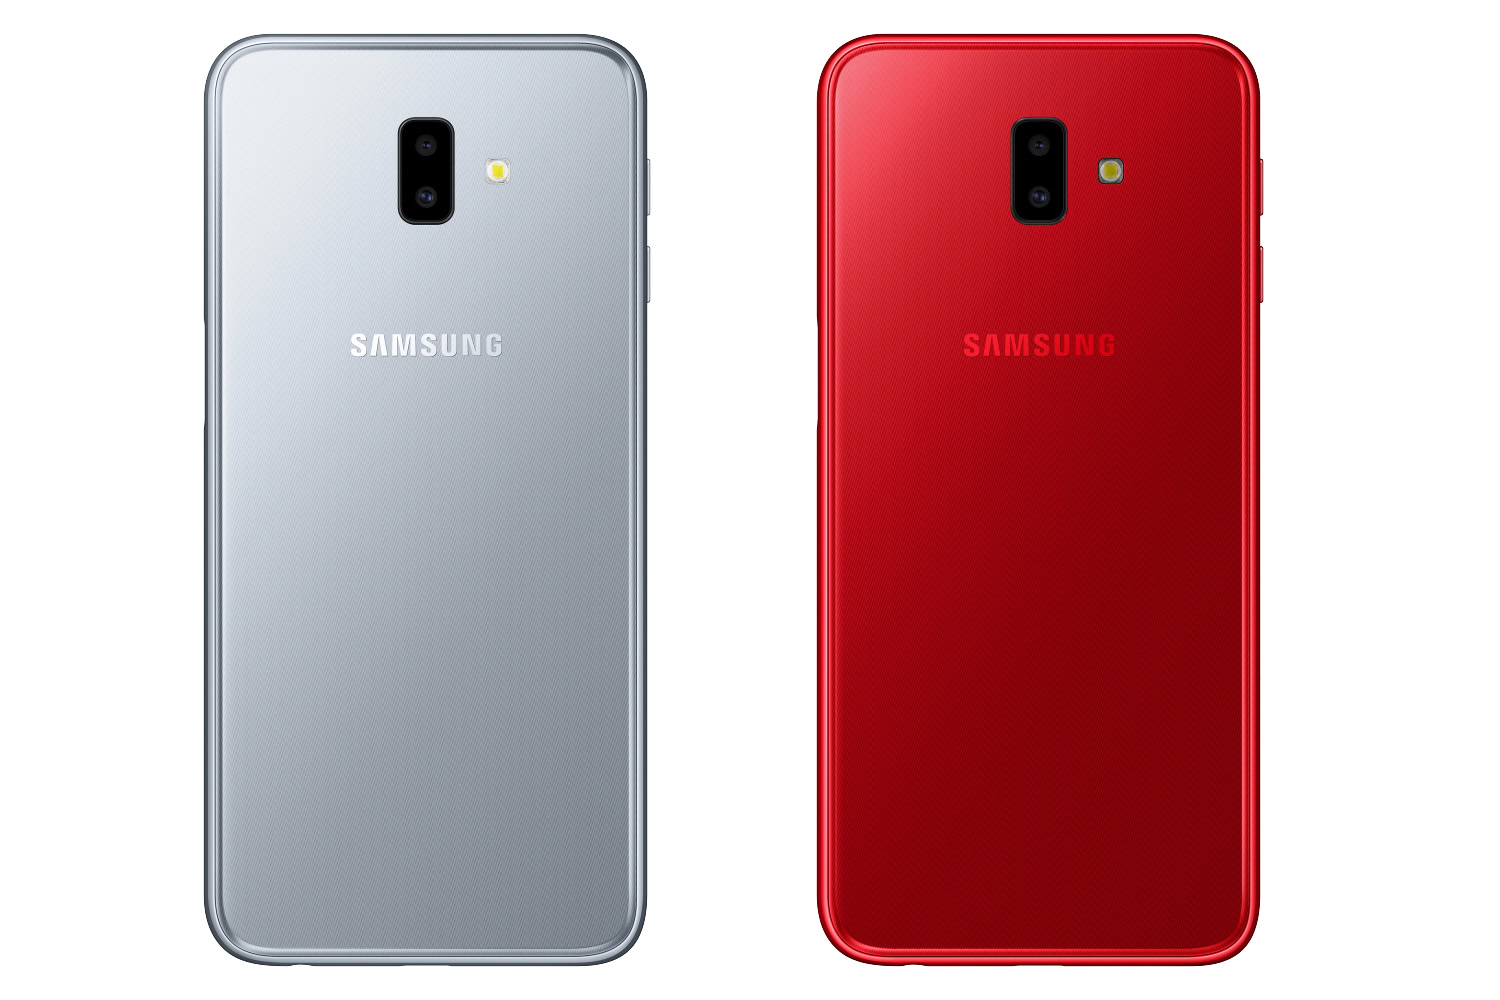 Samsung Galaxy J6 Plus revealed with a side-mounted fingerprint sensor